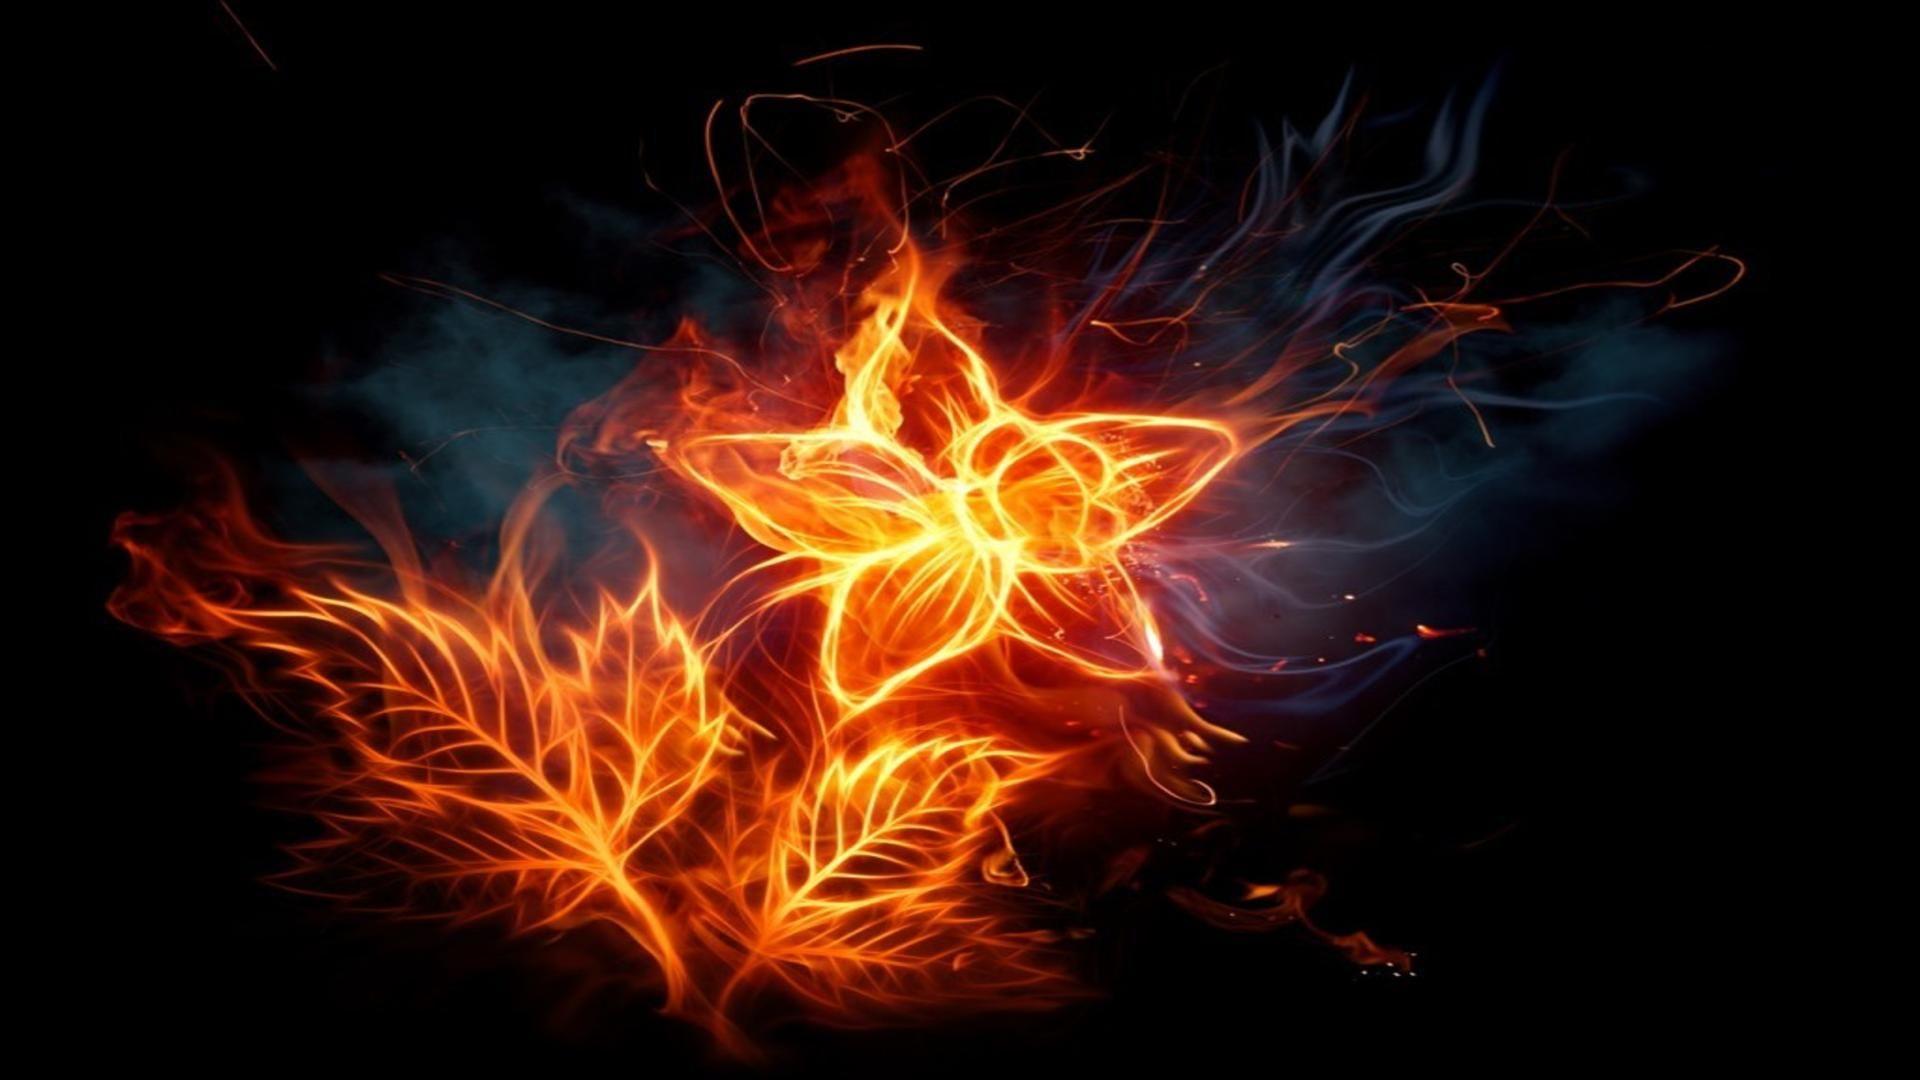 Flower on fire free desktop background wallpaper image